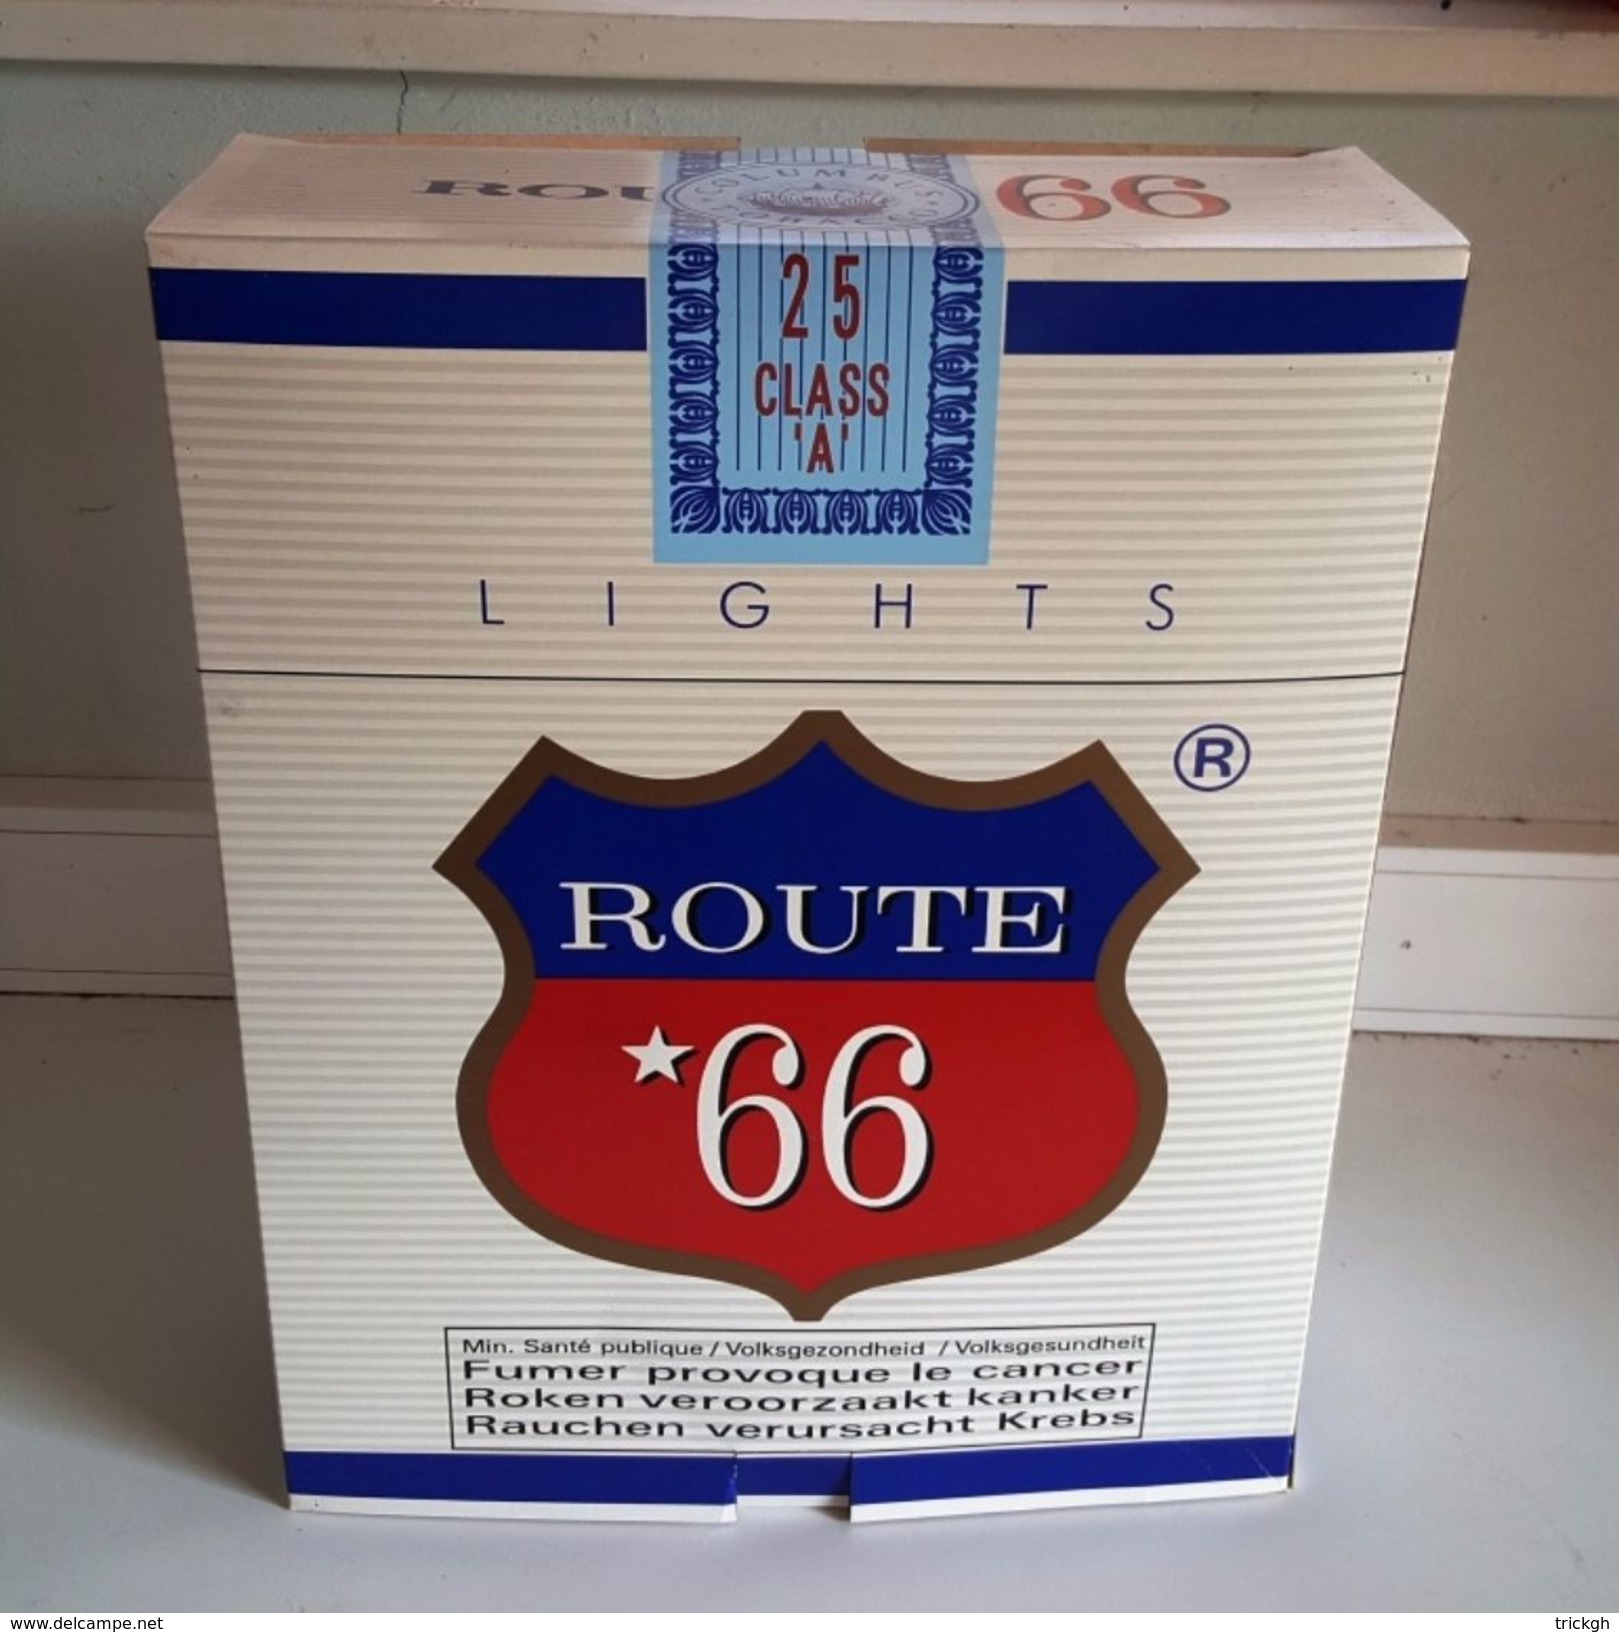 Grote Publidoos Sigaretten Route 66 - Objetos Publicitarios